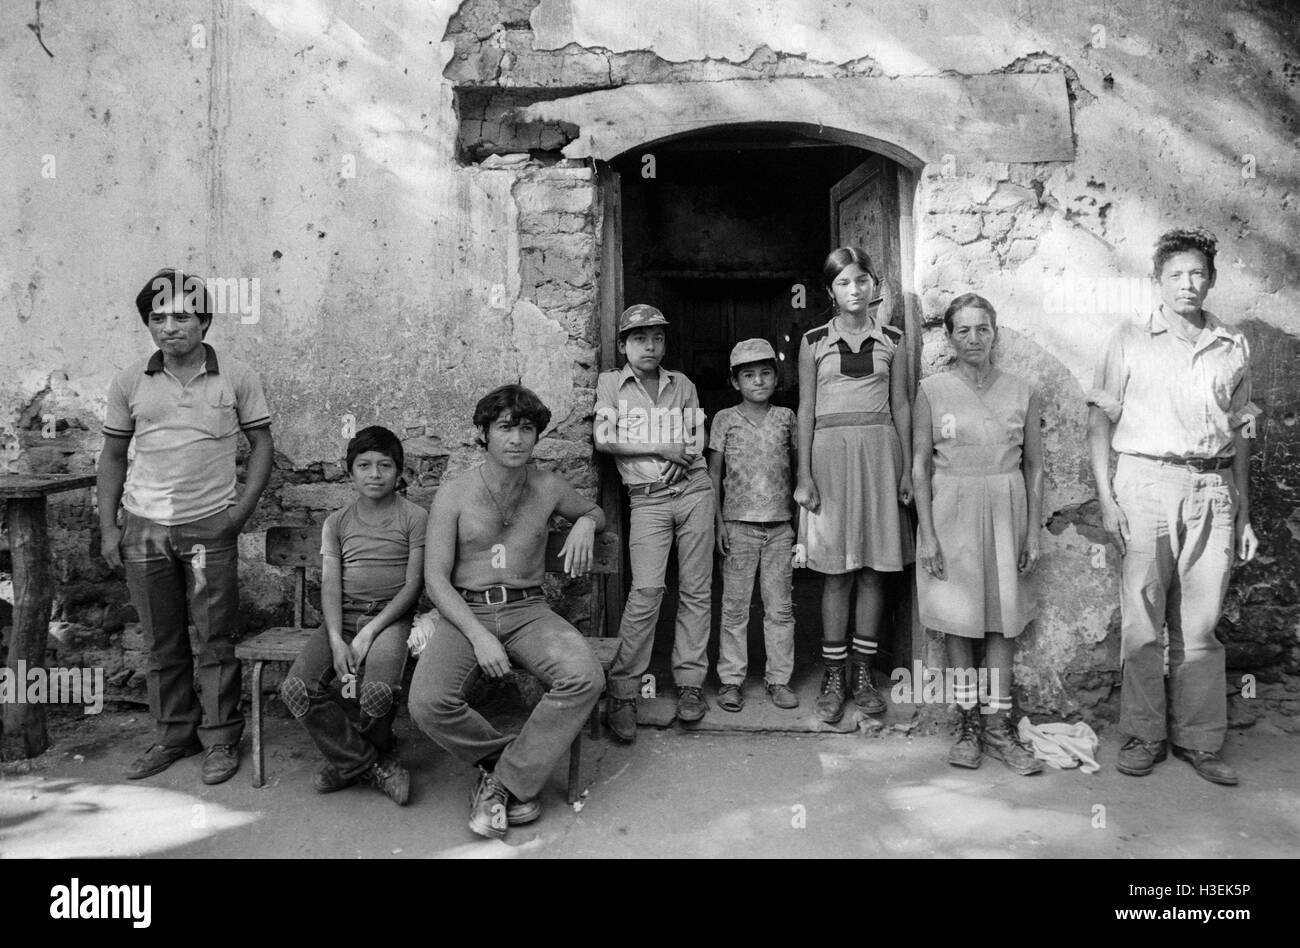 CHALATENANGO, EL SALVADOR, FEB 1984: - innerhalb der FPL-Guerilla Zones of Control - eine Familiengruppe. Stockfoto